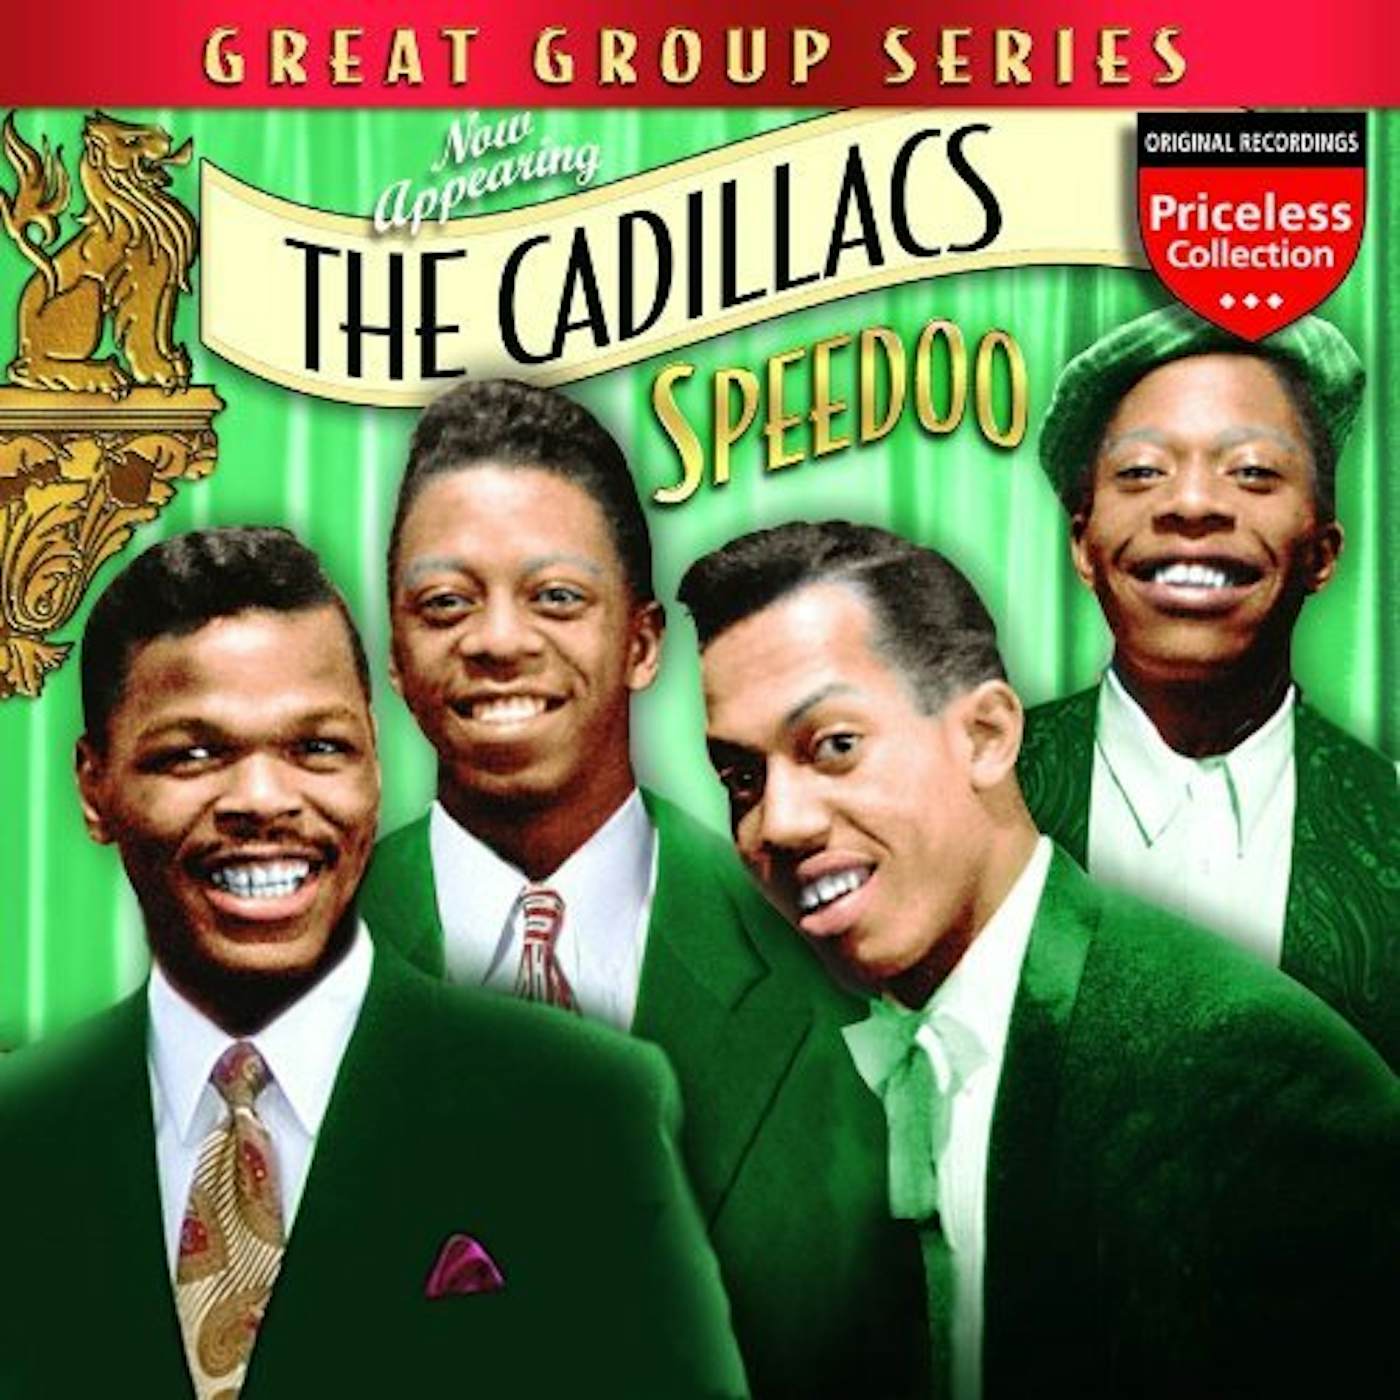 Cadillacs SPEEDO CD